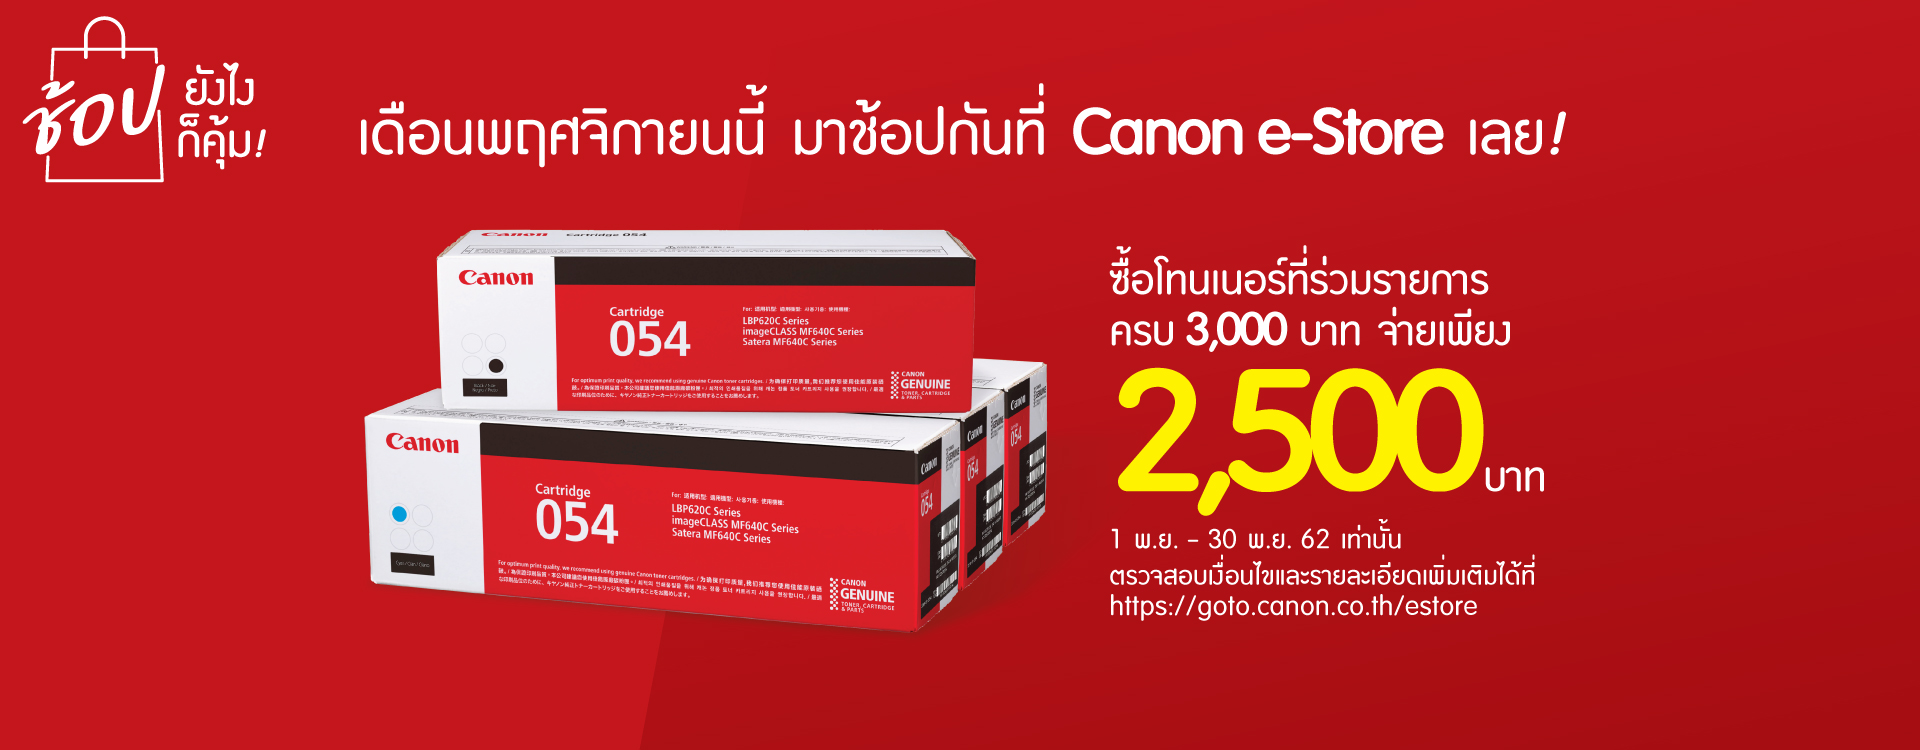 Home Canon Thailand - peugeot 206 roblox